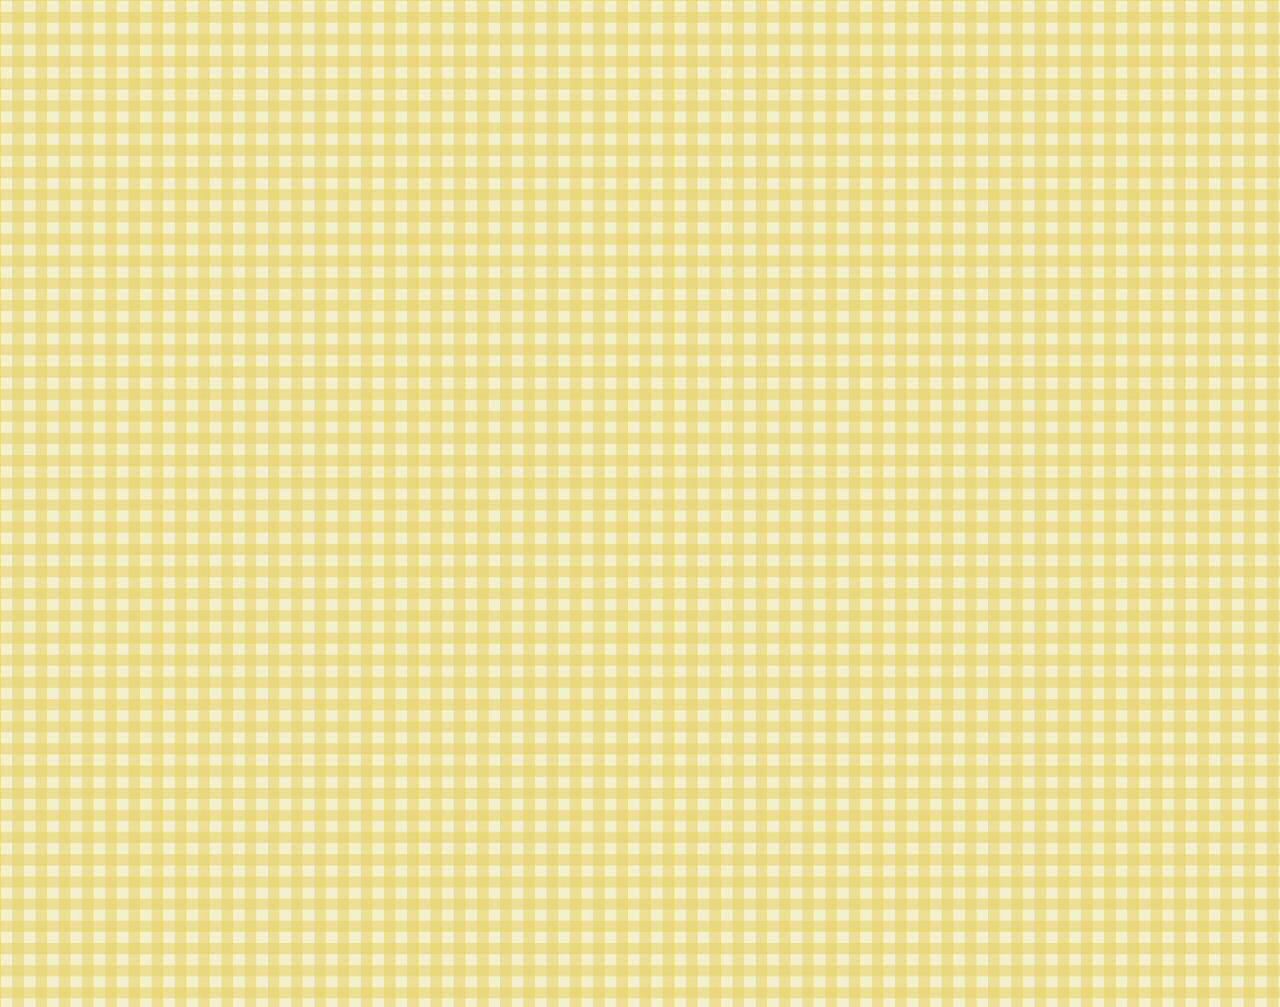 Yellow Gingham Desktop Wallpaper Backgrounds